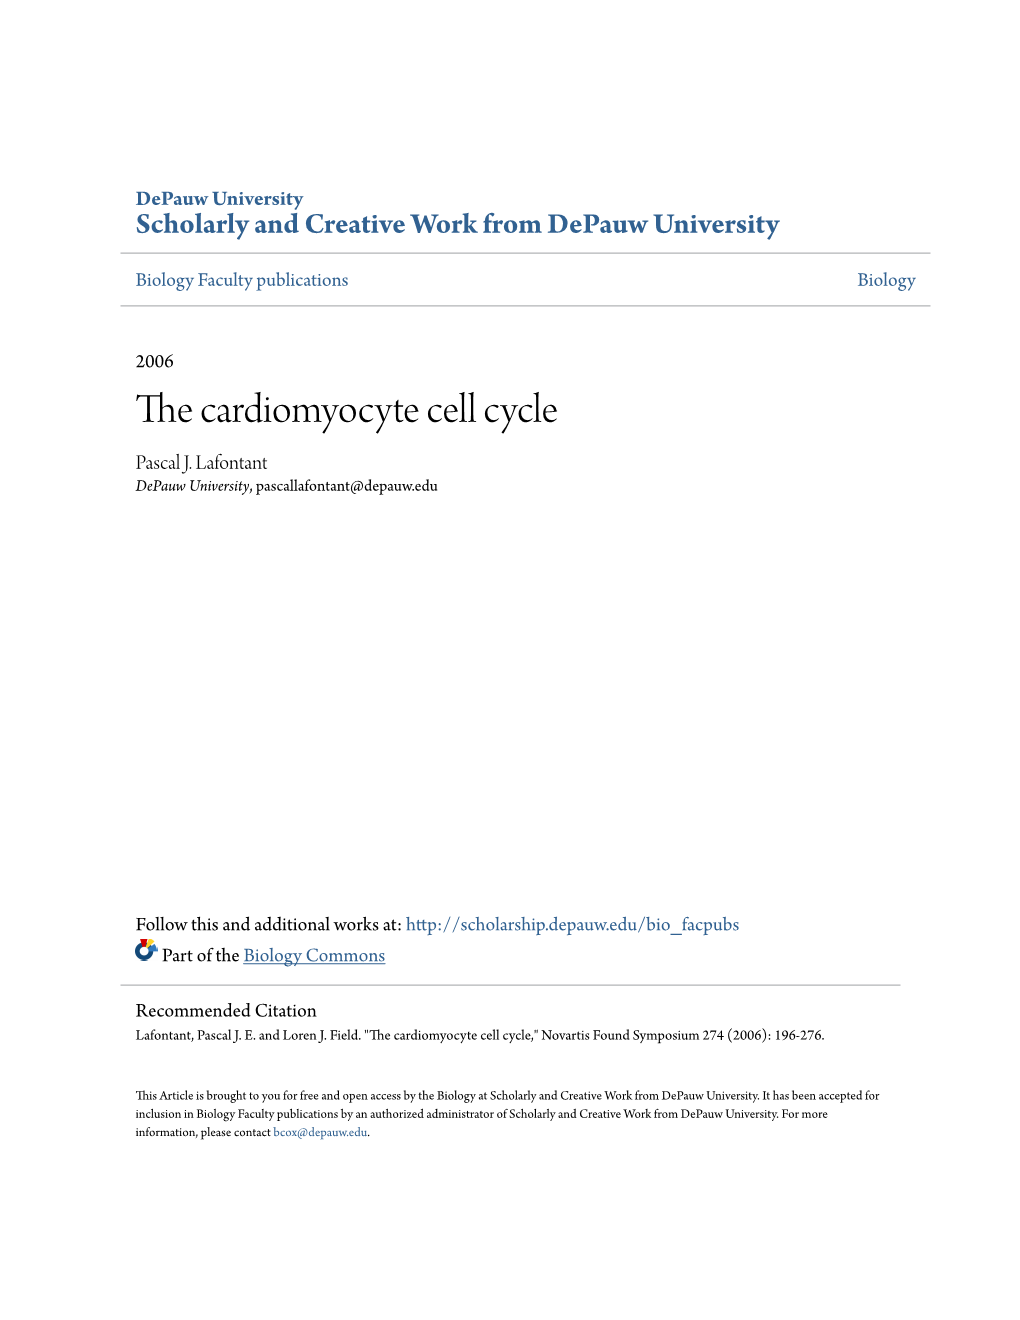 The Cardiomyocyte Cell Cycle," Novartis Found Symposium 274 (2006): 196-276